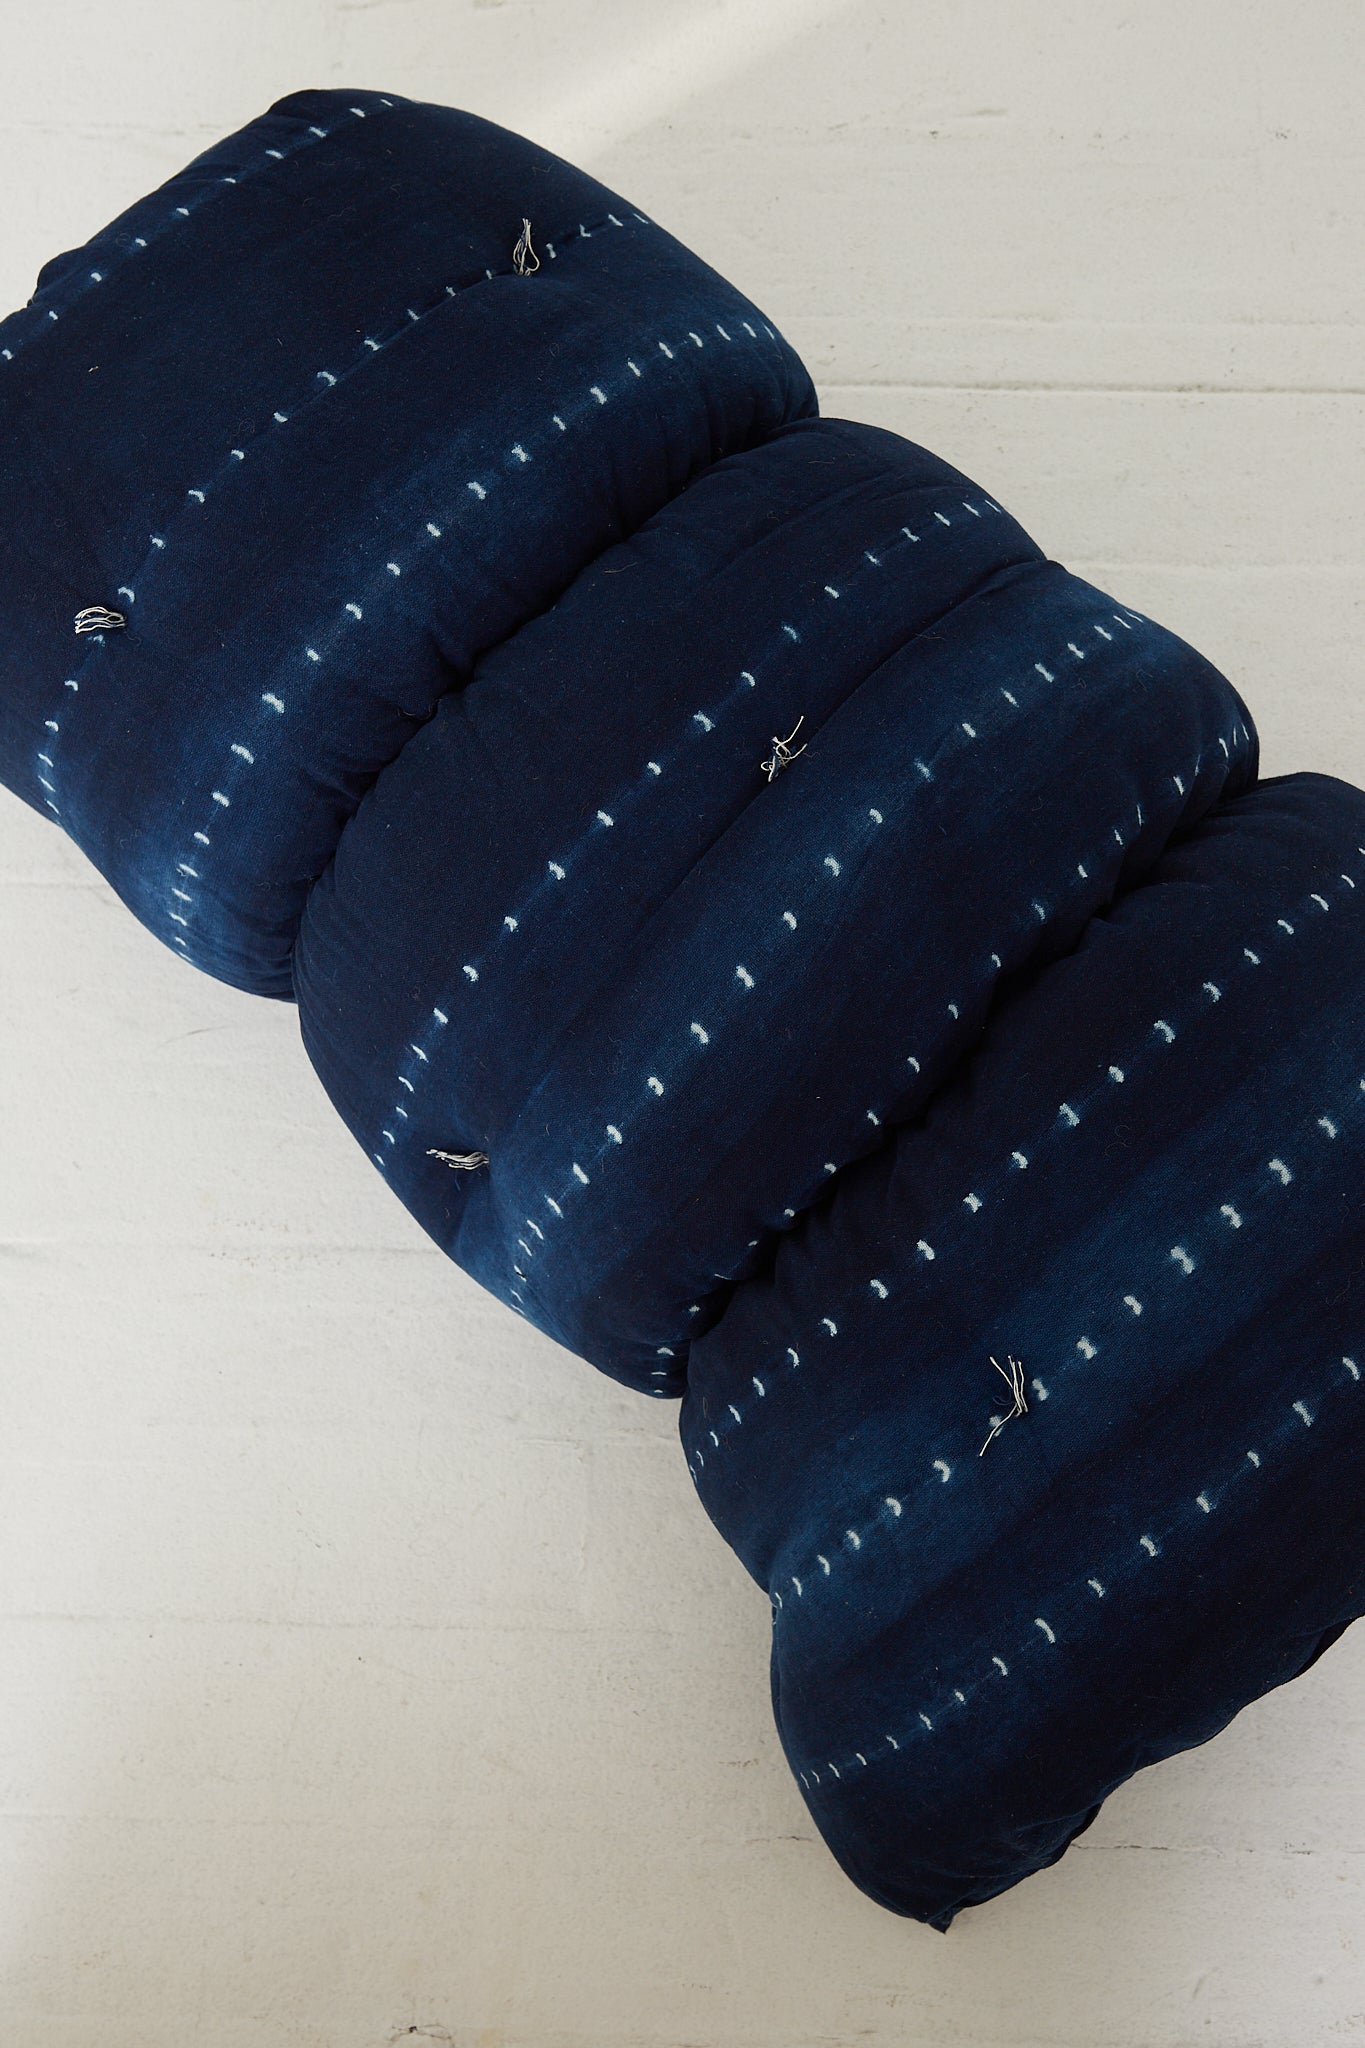 A Tensira Tufted Overlay Mattress in Dark Indigo Tie Dye pillow made of cotton, laying on a wooden floor.